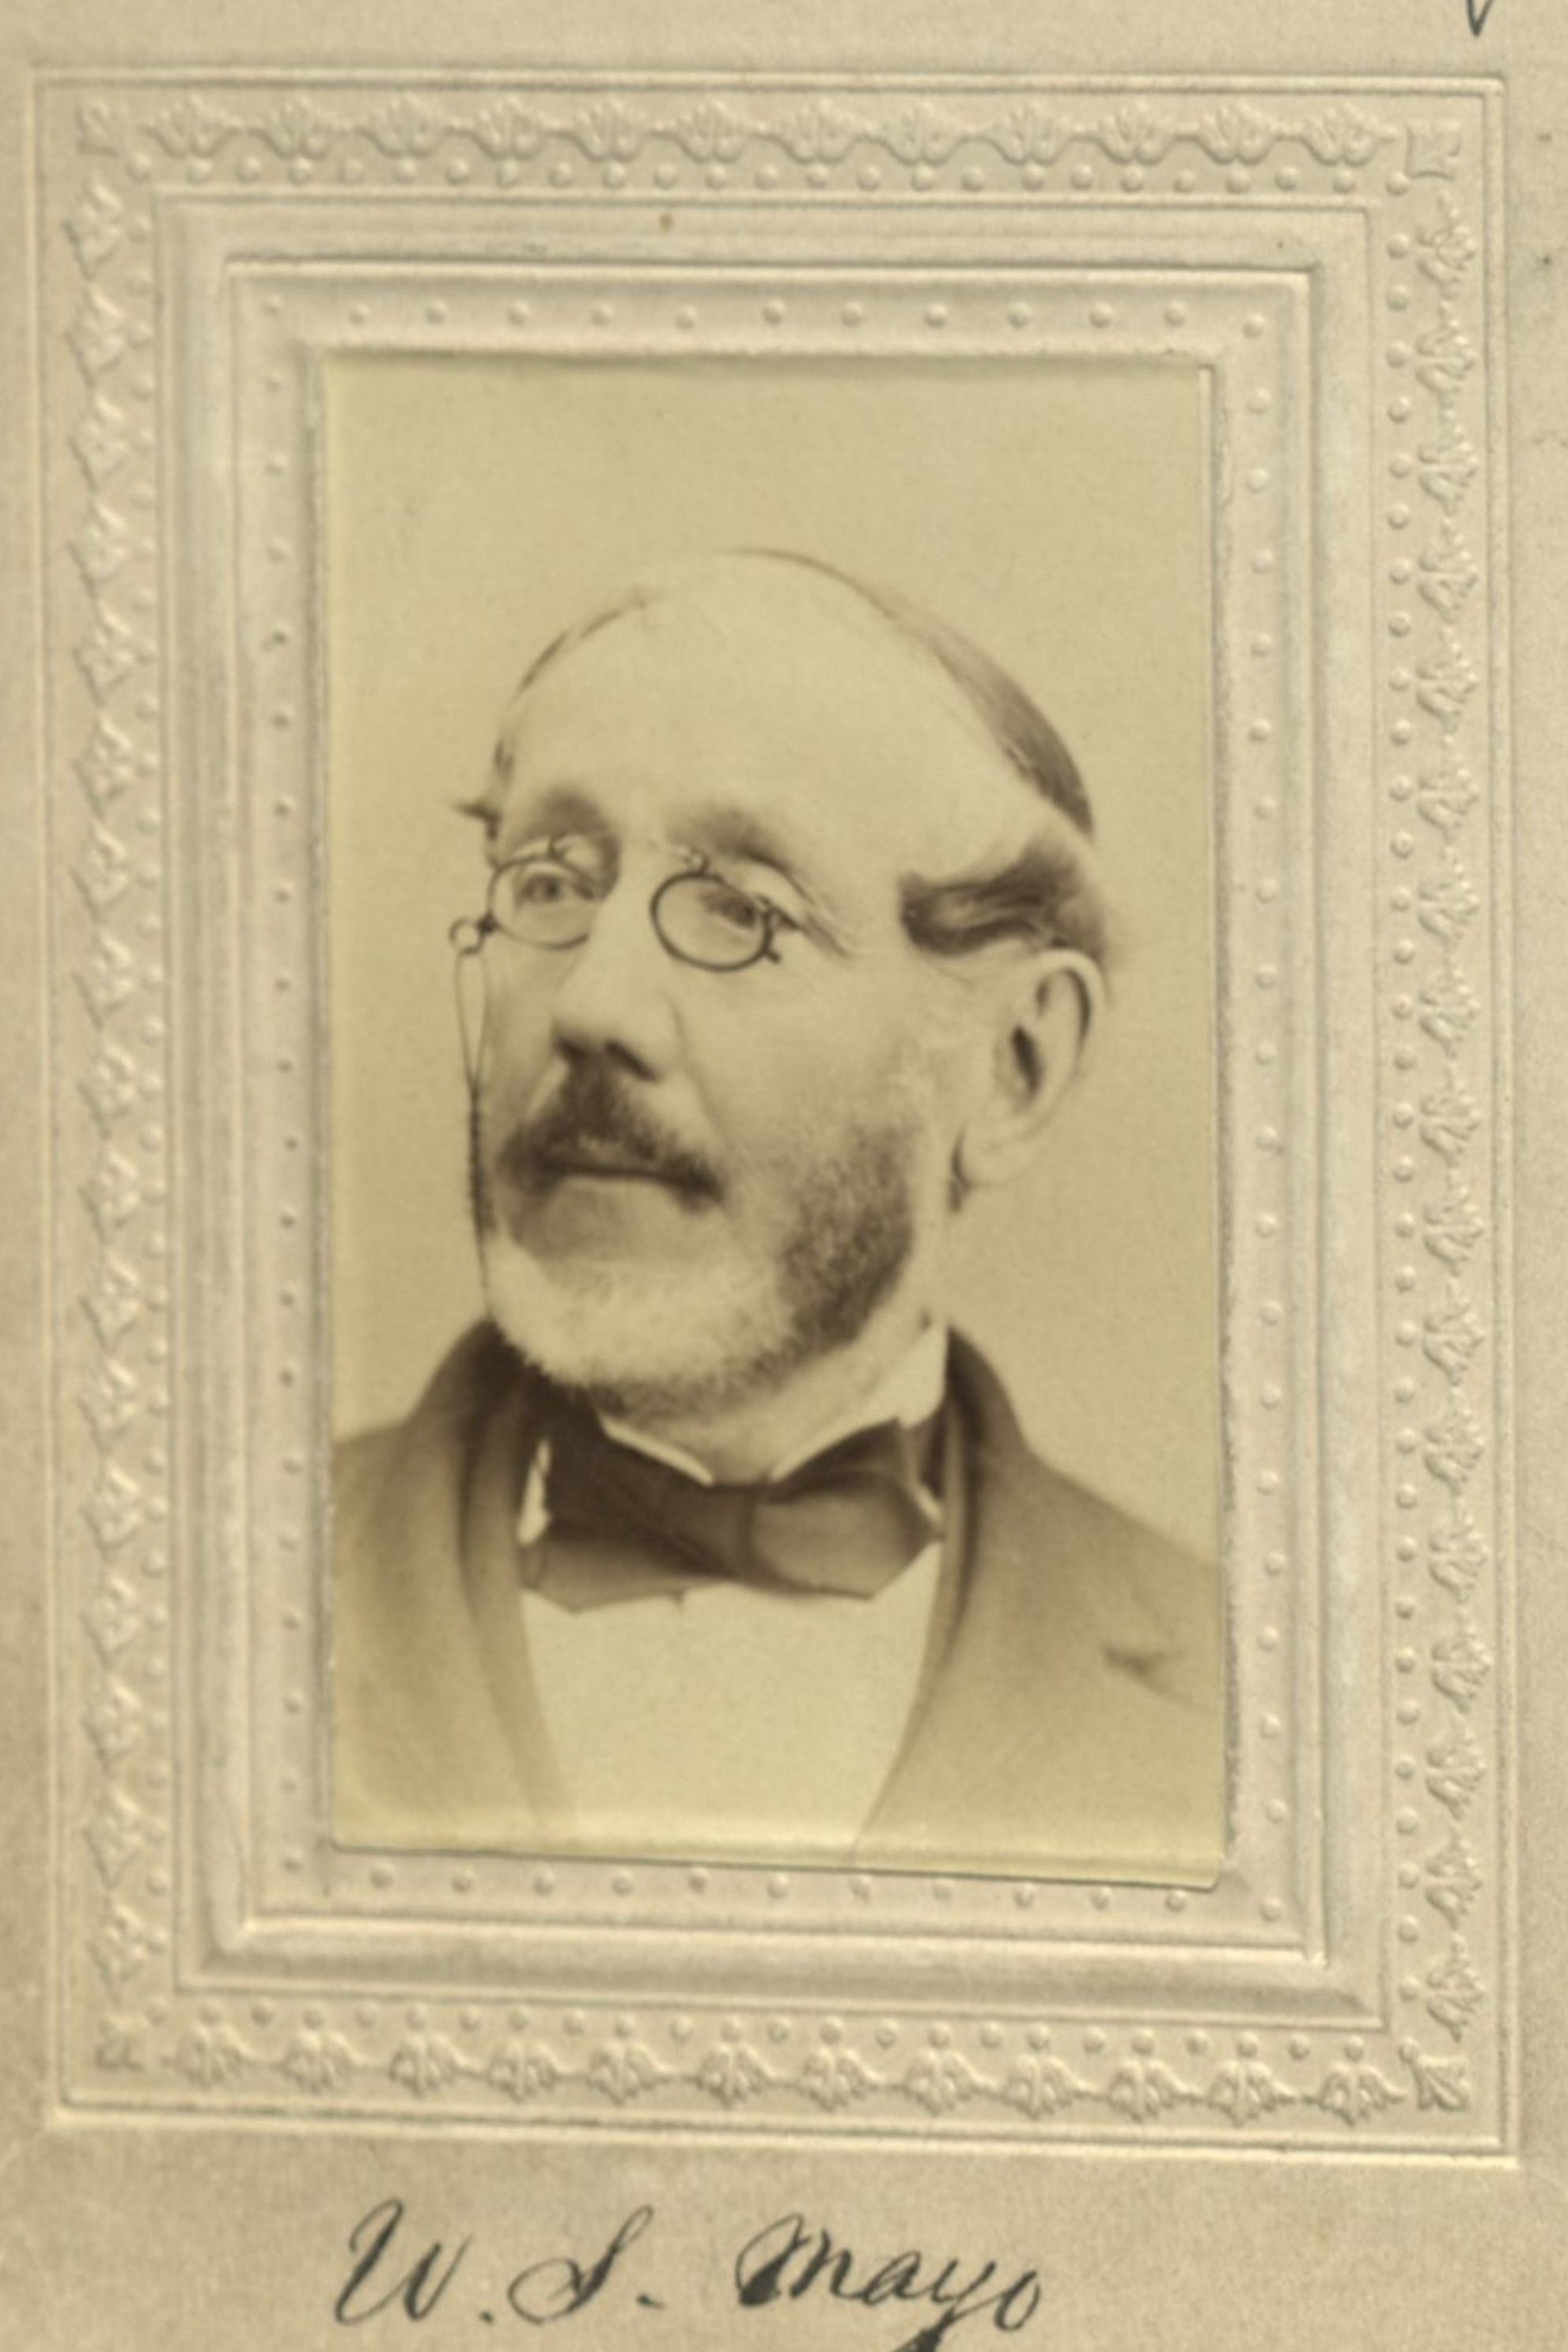 Member portrait of William S. Mayo